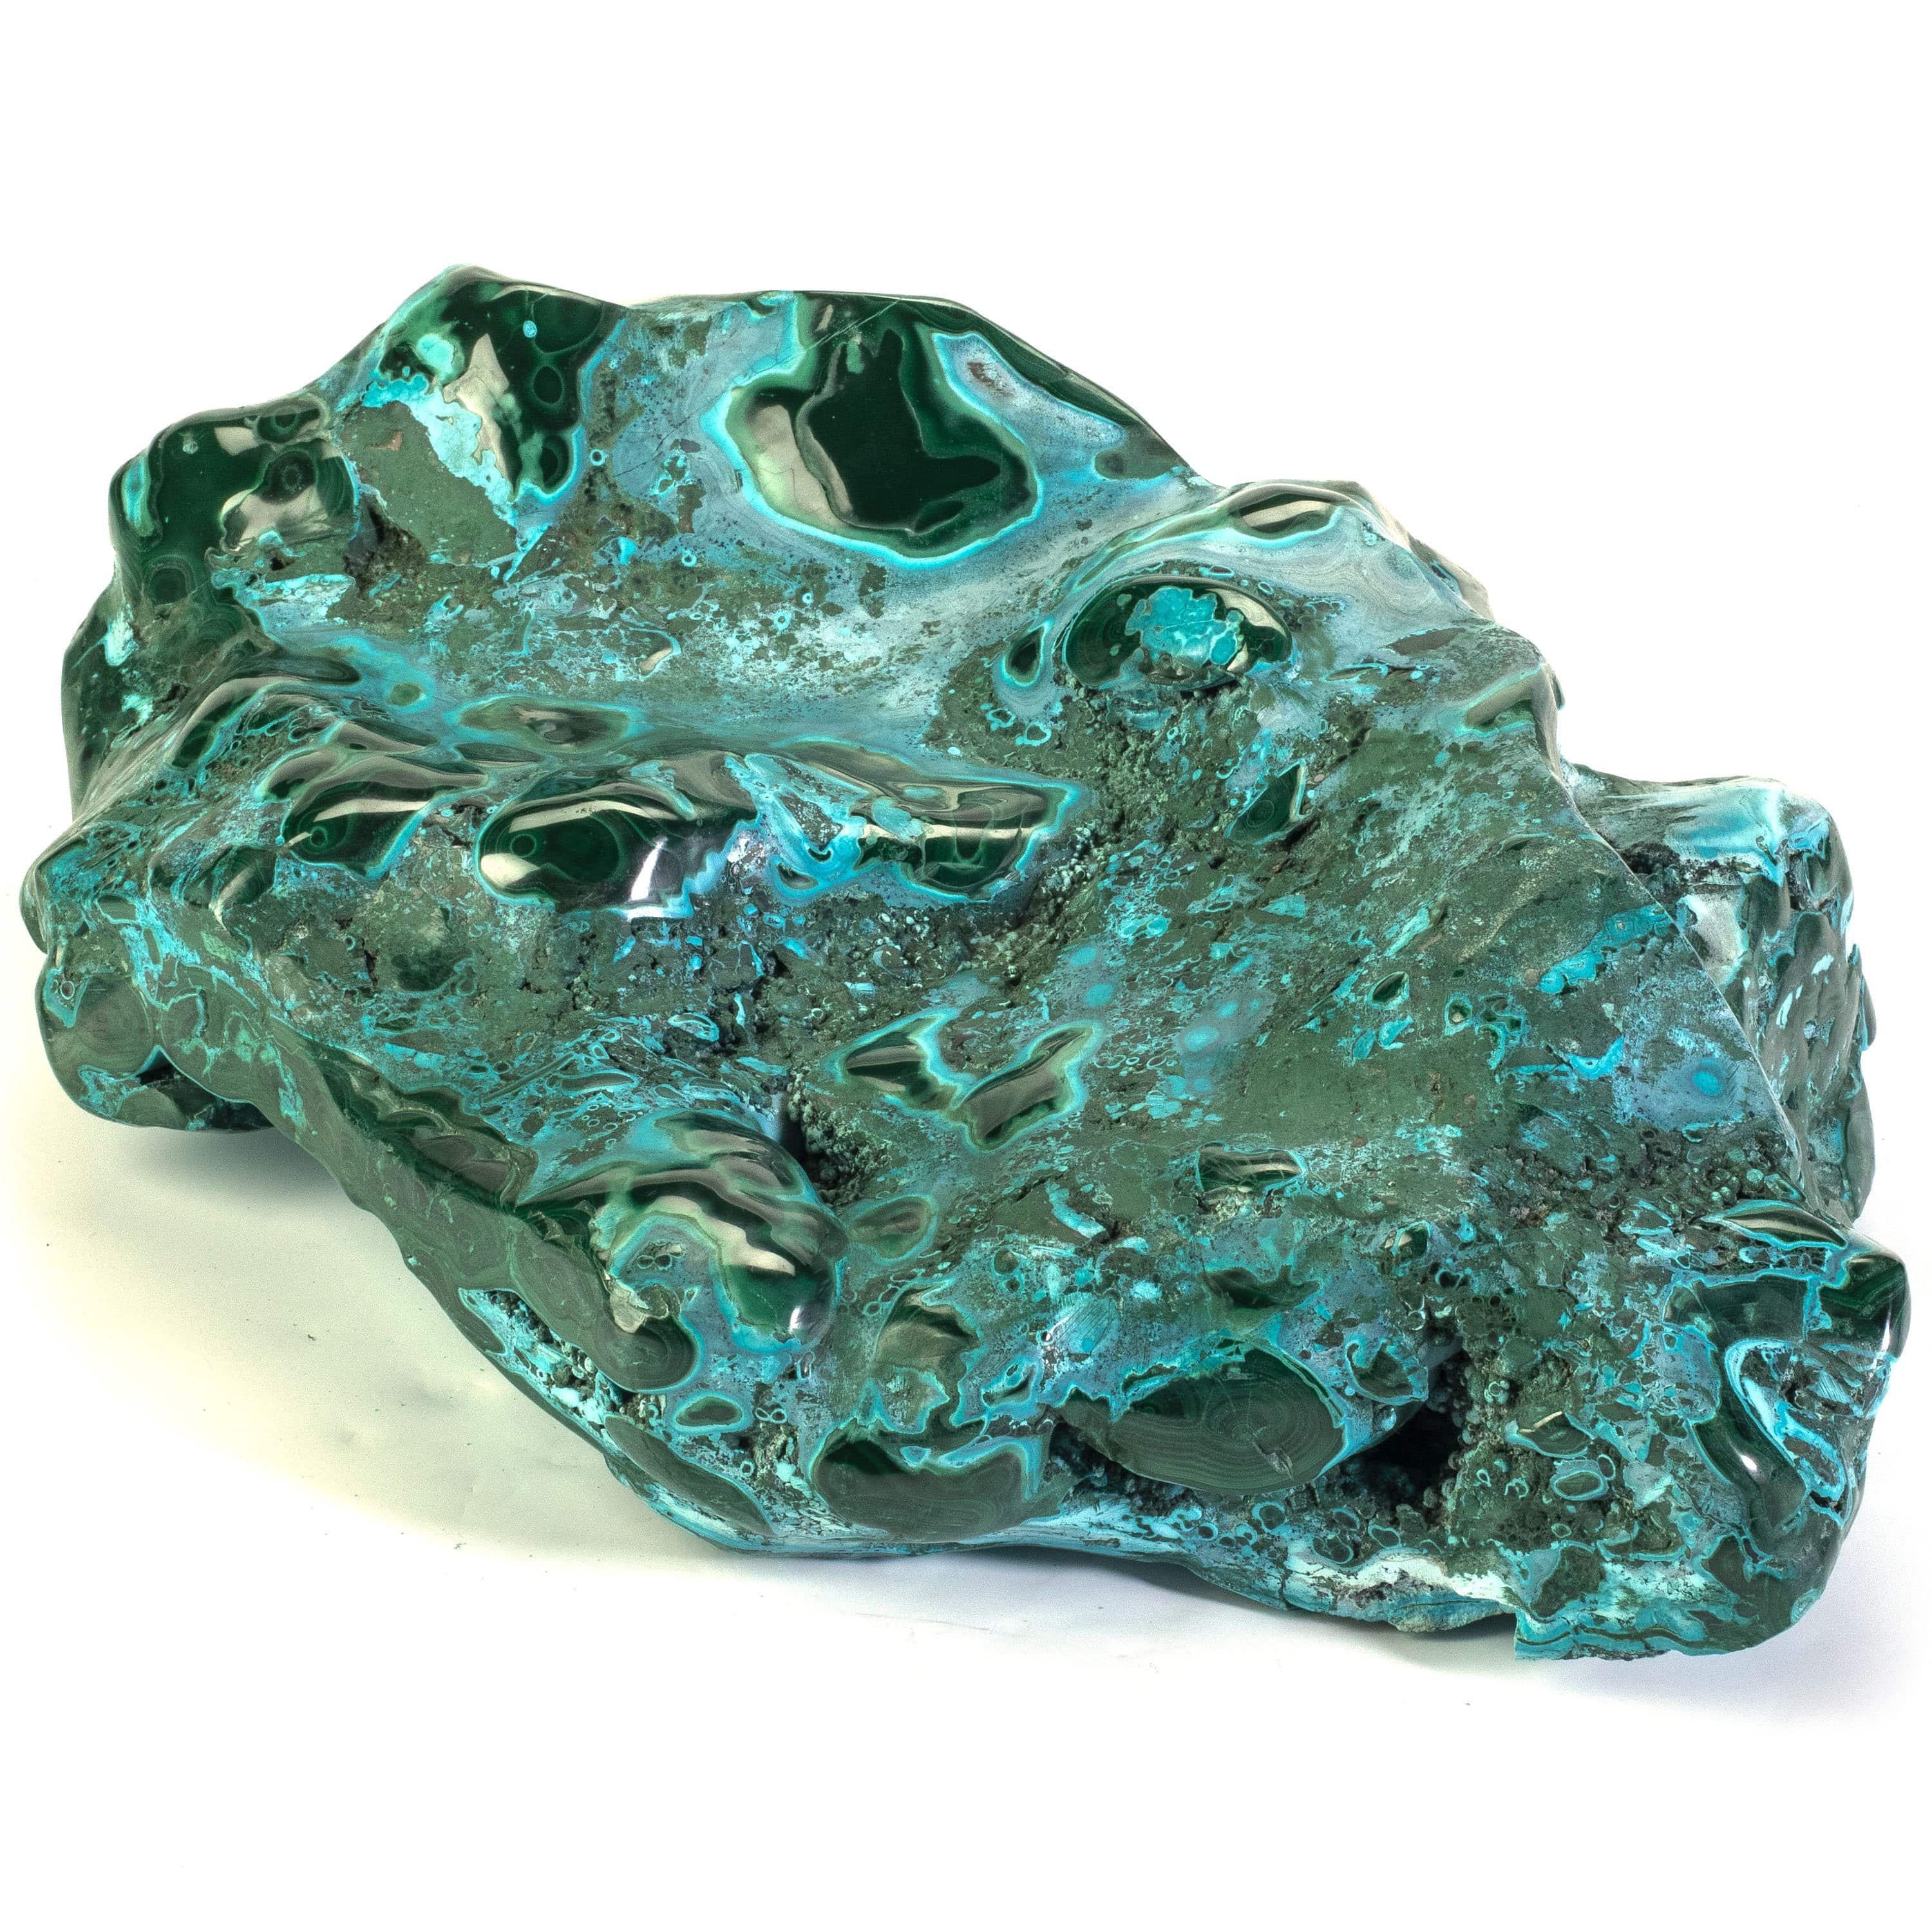 Kalifano Malachite Rare Natural Green Malachite with Blue Chrysocolla Freeform Specimen from Congo - 12.6 kg / 27.8 lbs MAC11900.001